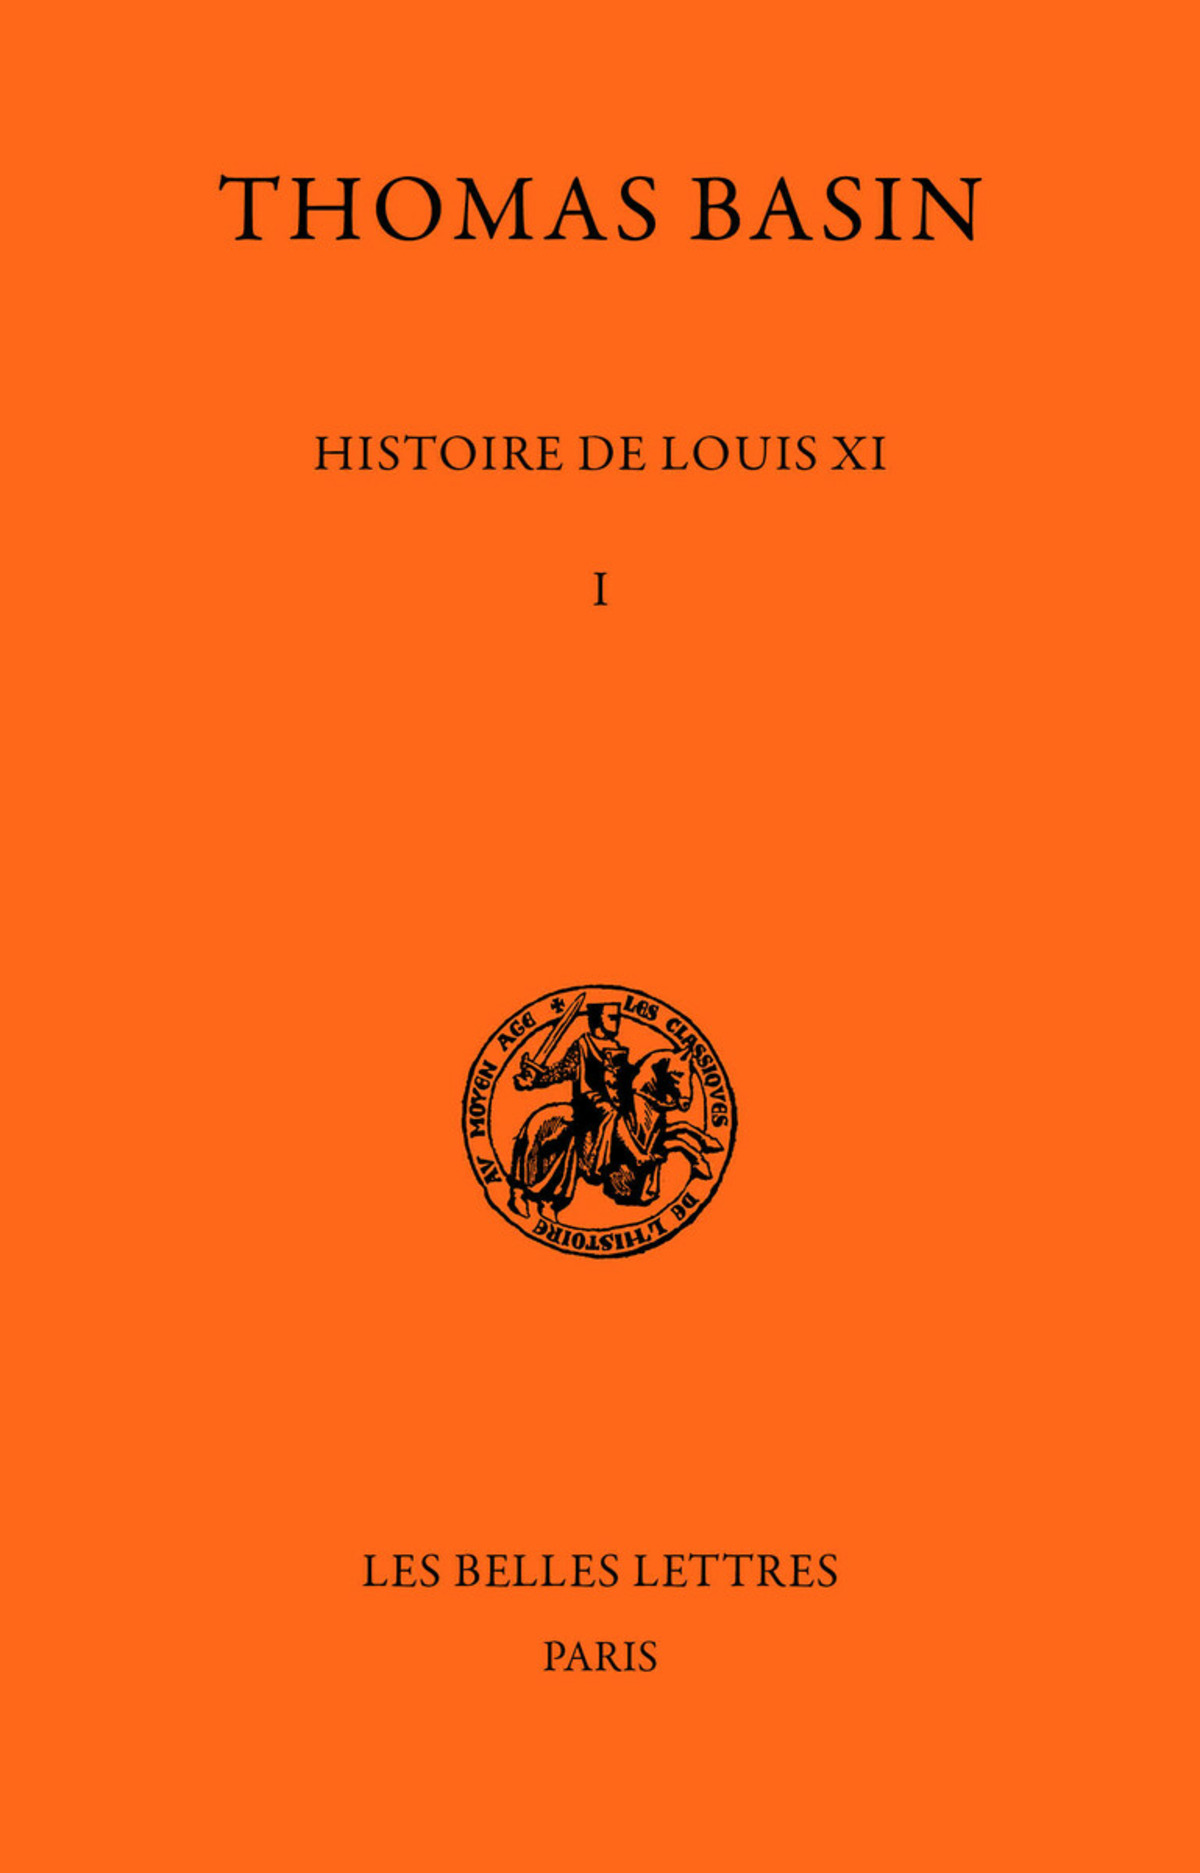 Histoire de Louis XI. Tome I : 1461-1469